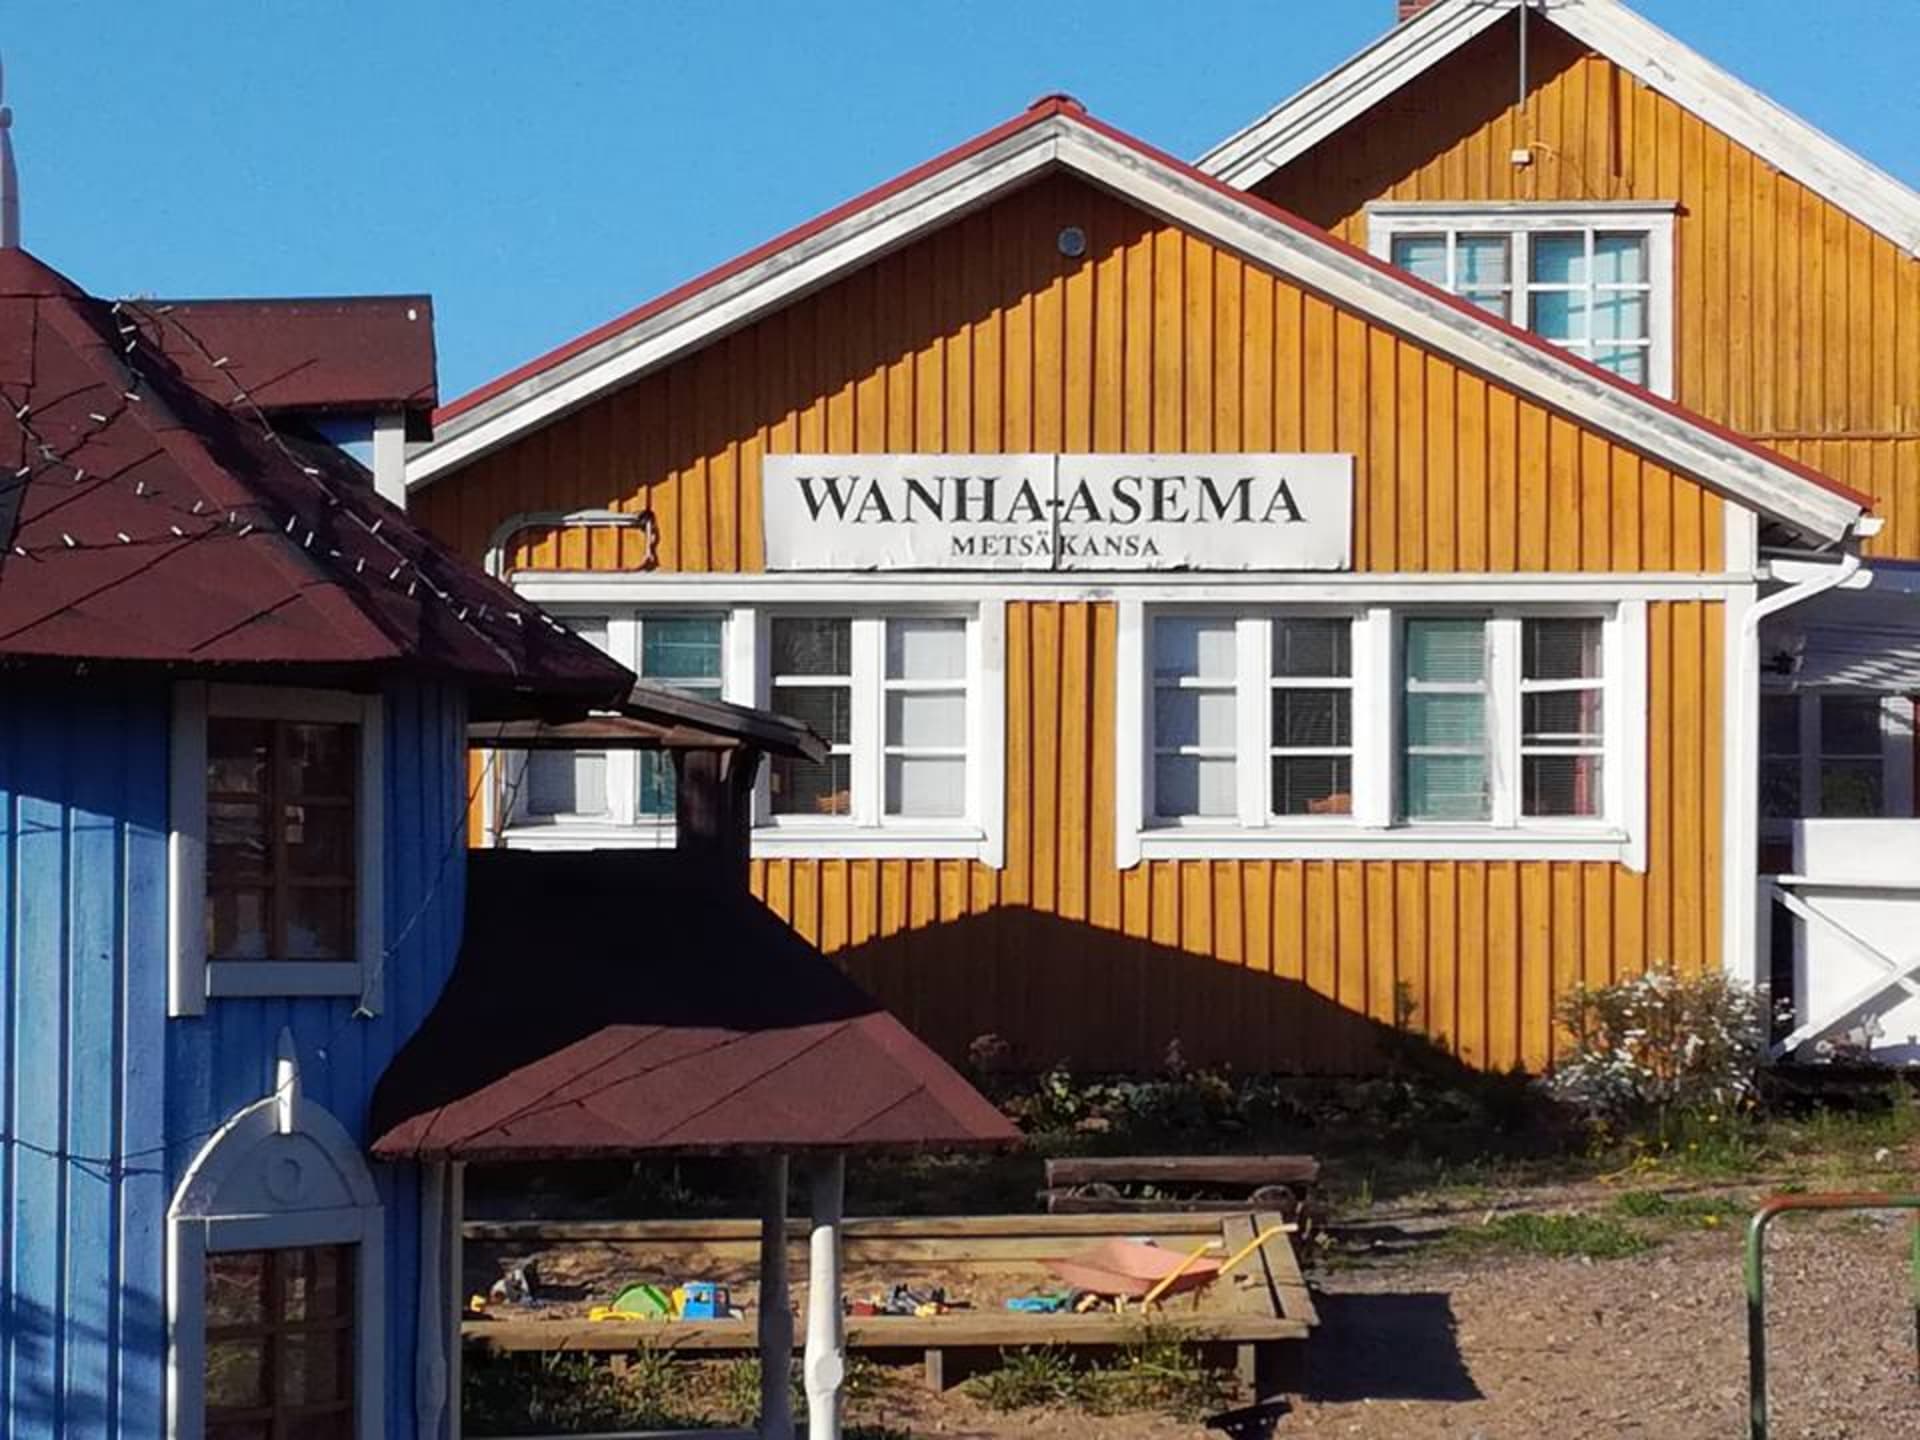 Wanha Asema is an old railway station.